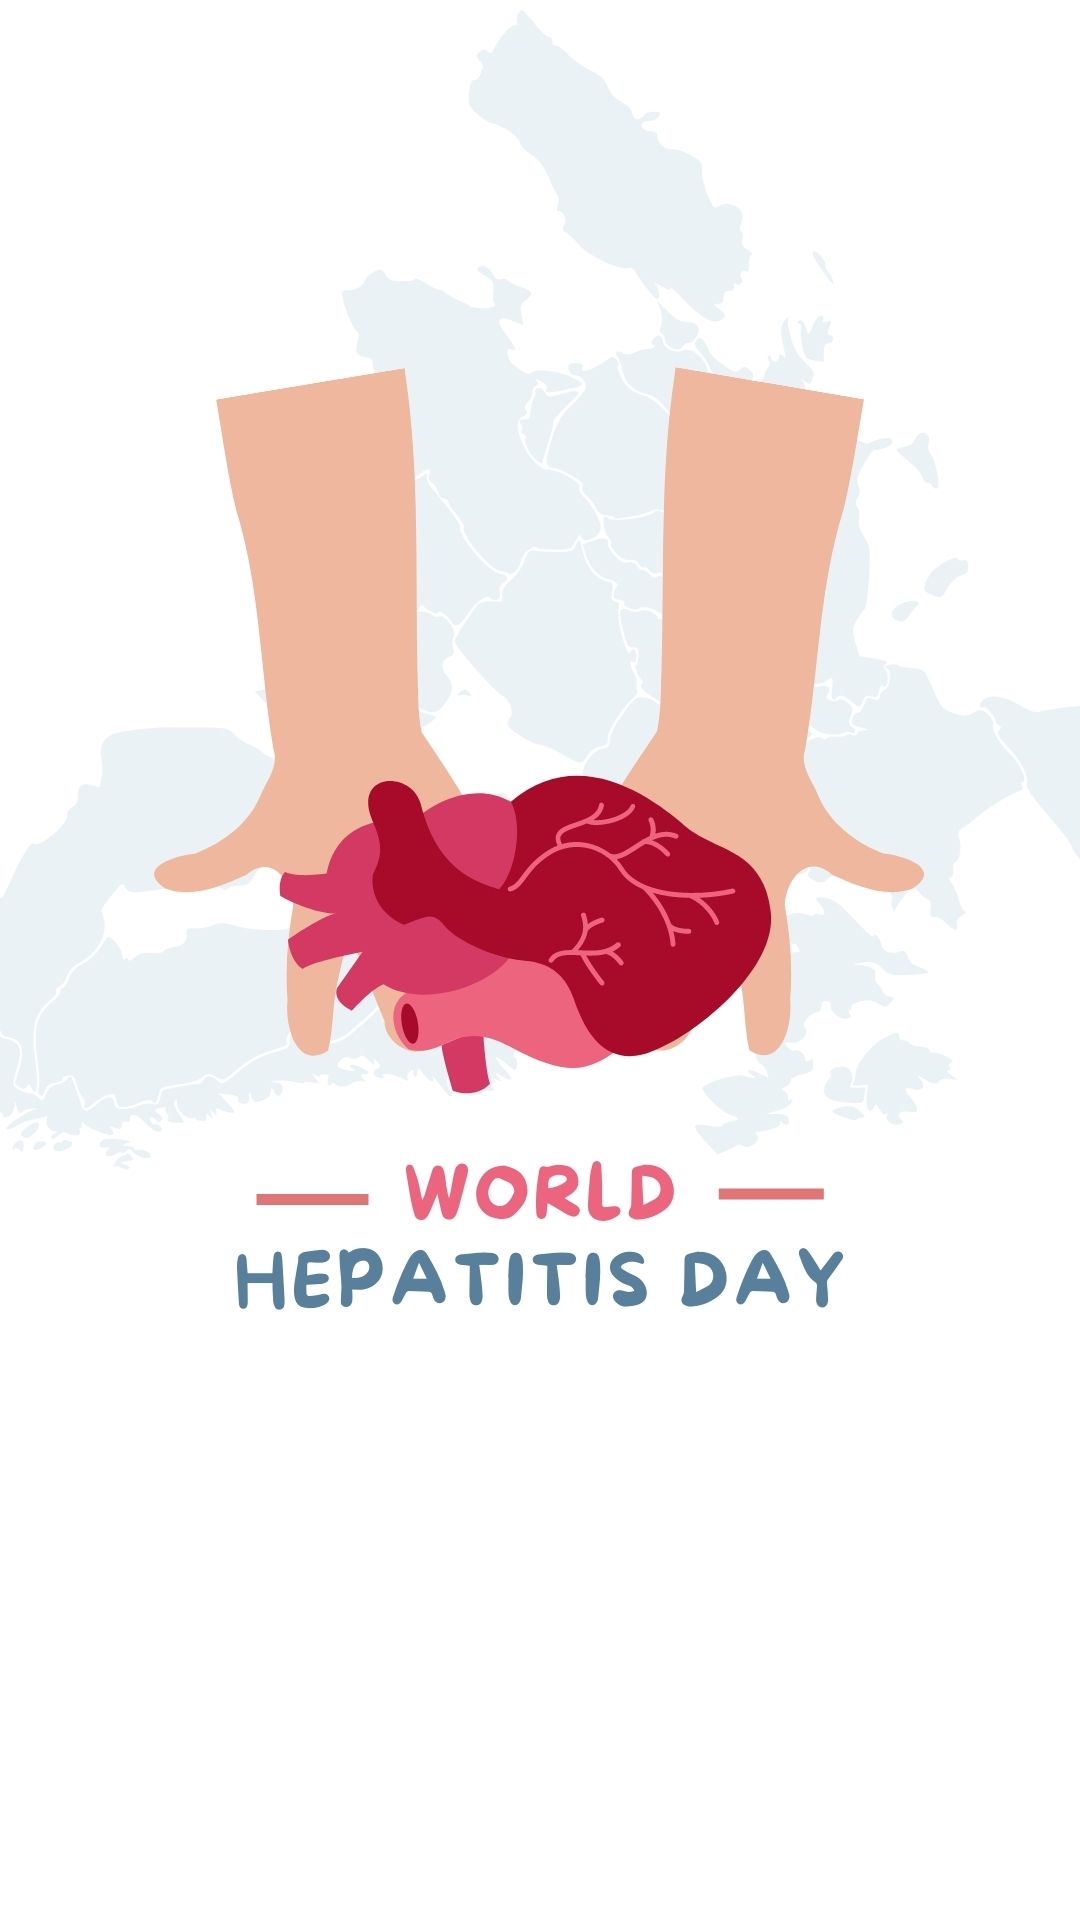 world hepatitis day images for instagram story (5)